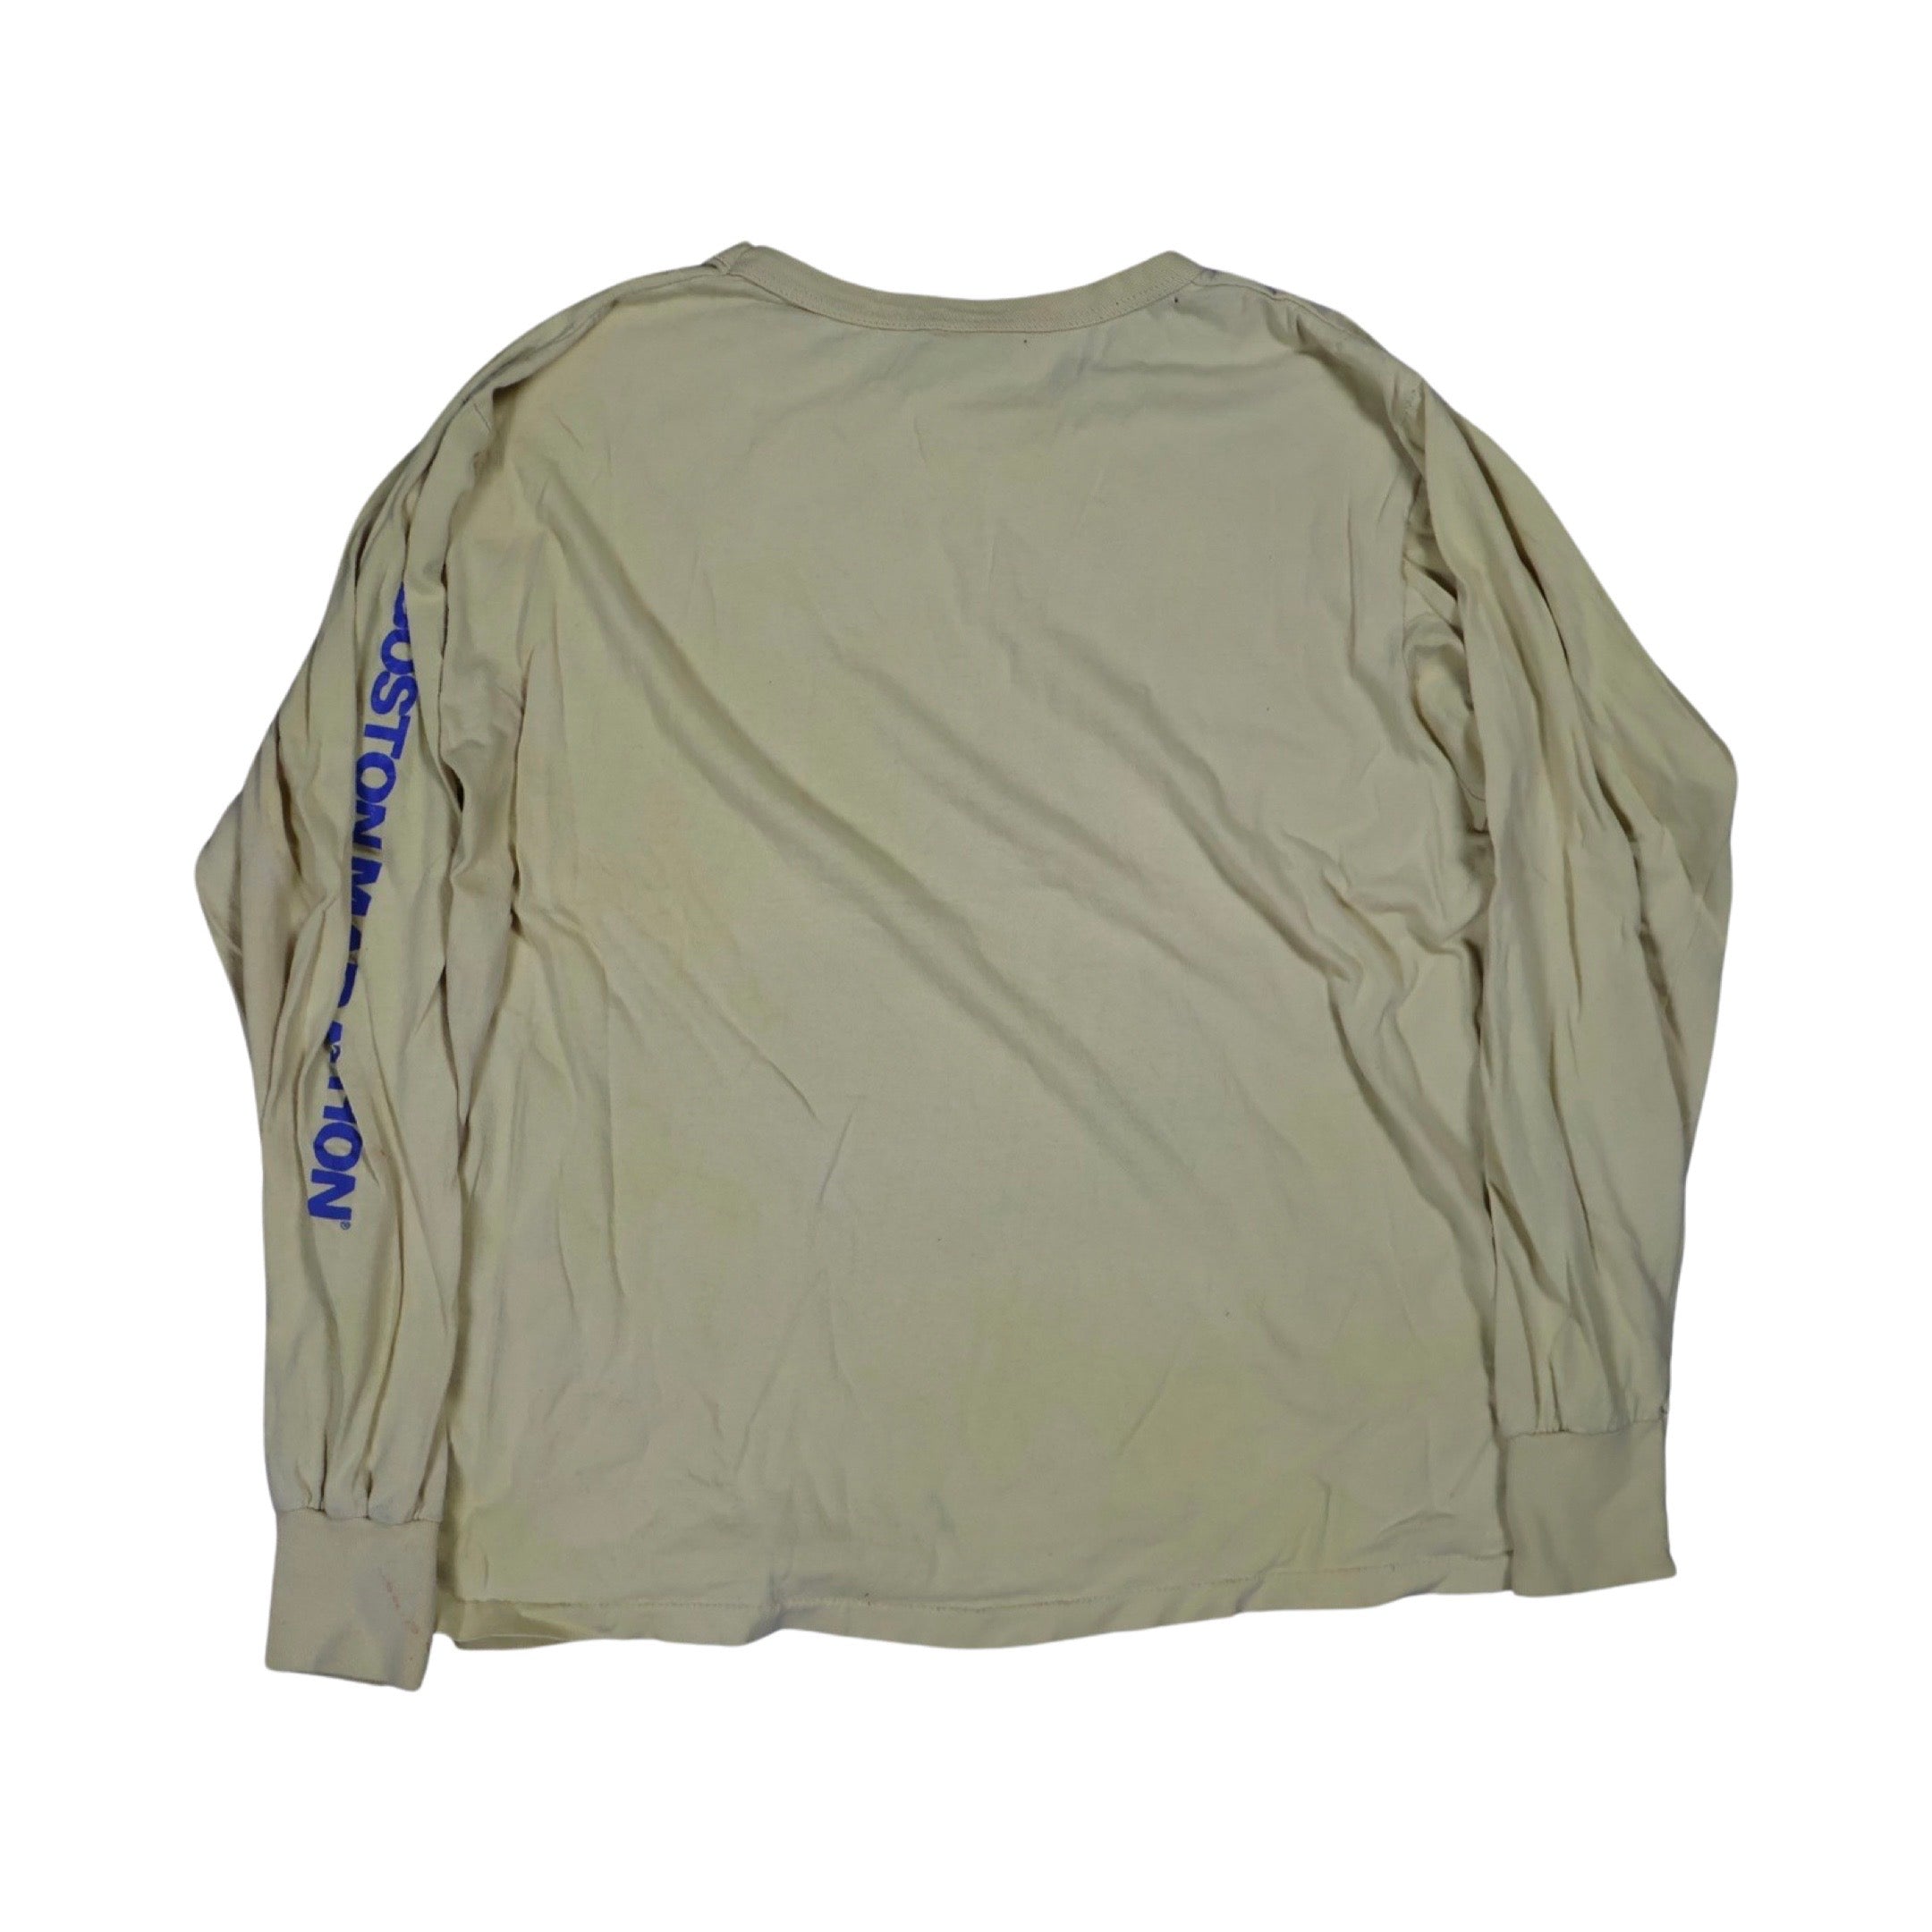 Boston Marathon 1987 Longsleeve T-Shirt Essential (Medium)